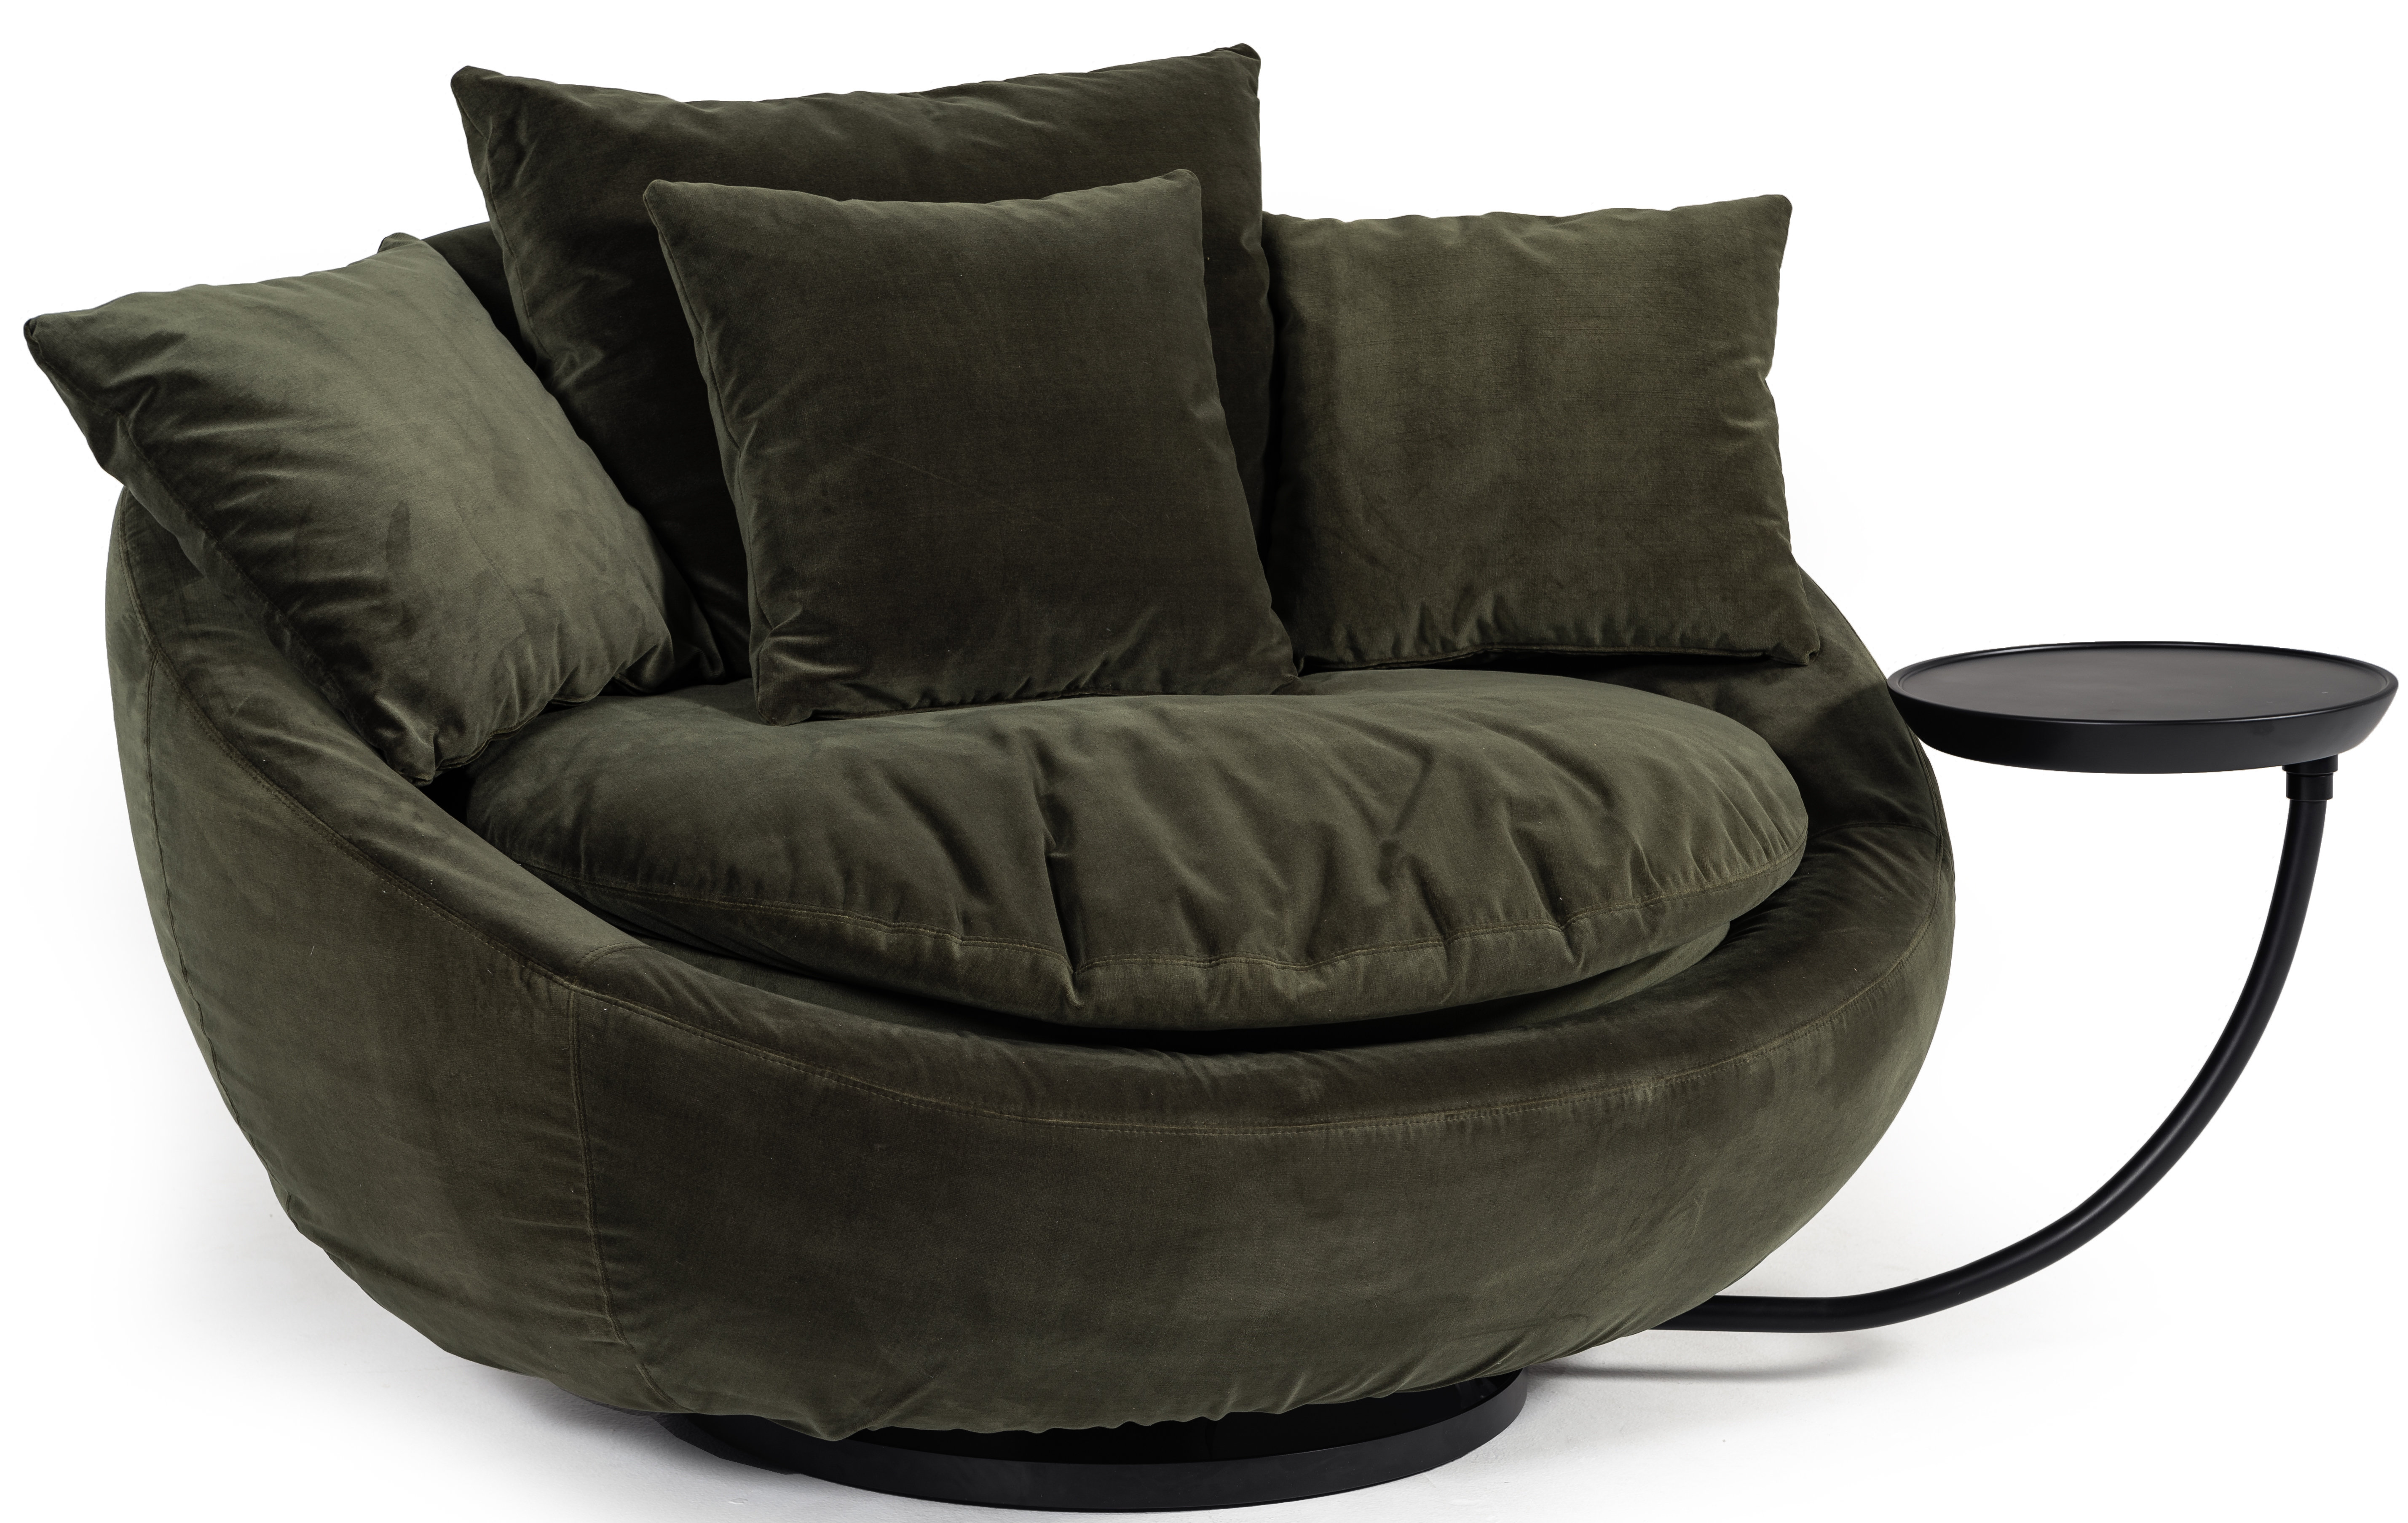 Round Swivel Recliner Chair - Home Design Ideas